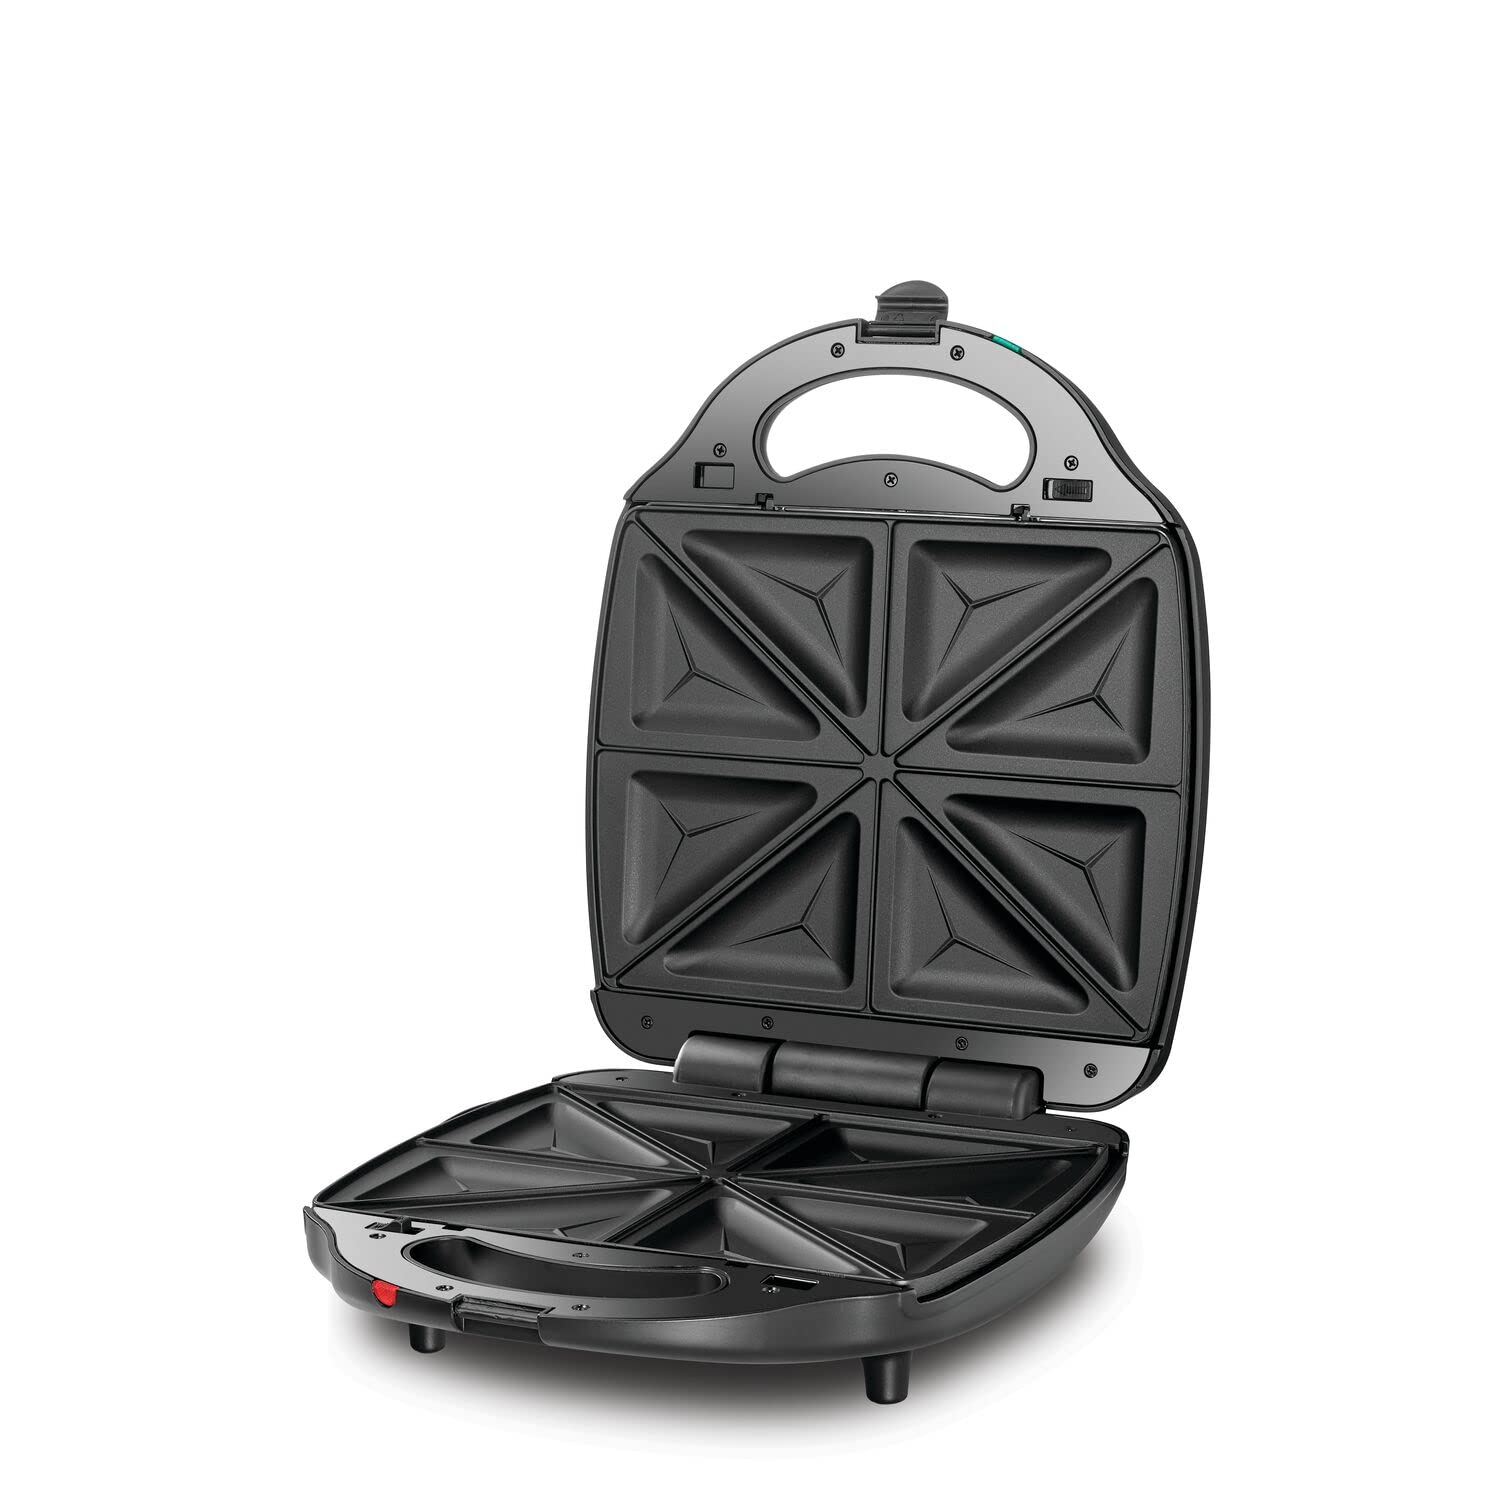 Black & Decker 1400W 2-in-1 4 Slice Sandwich Maker & Grill with Interchangeable Plate بلاك اند ديكير ماكينة صنع الساندويتشات 4 شرائح 2 في 1 بقدرة 1400 واط مع طبق قابل للتبديل